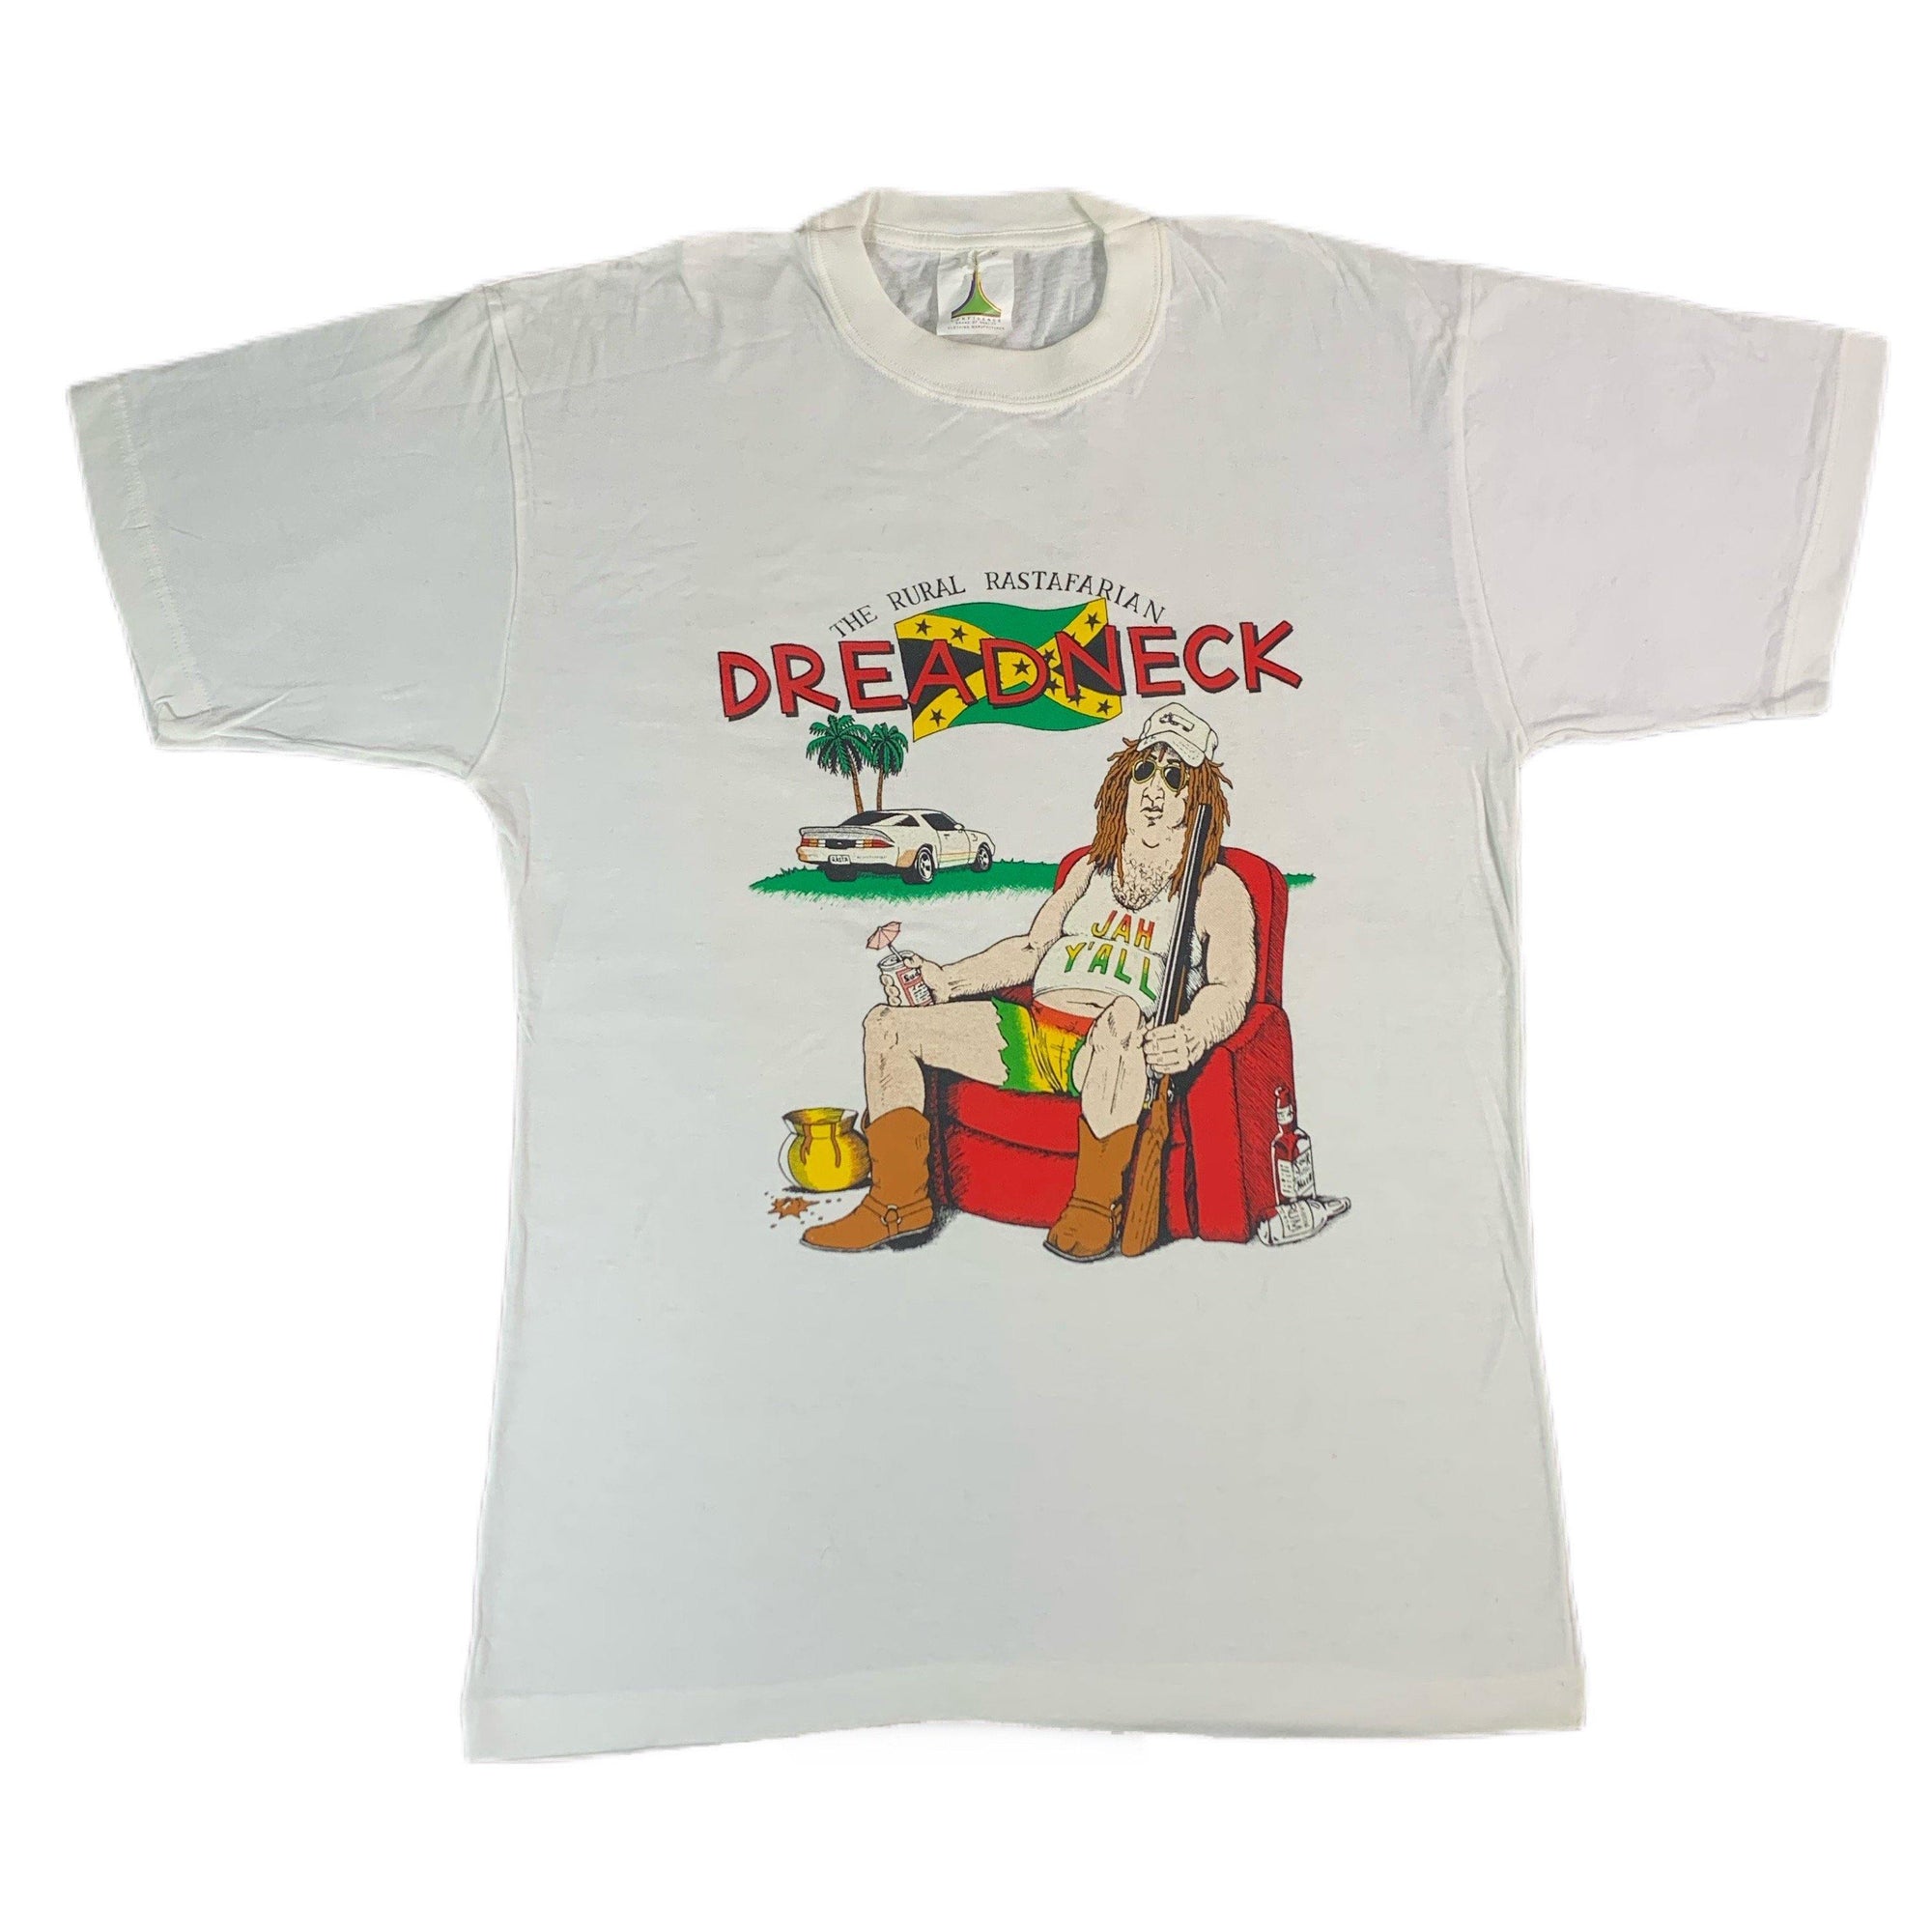 Vintage Dreadneck "The Rural Rastafarian" T-Shirt - jointcustodydc